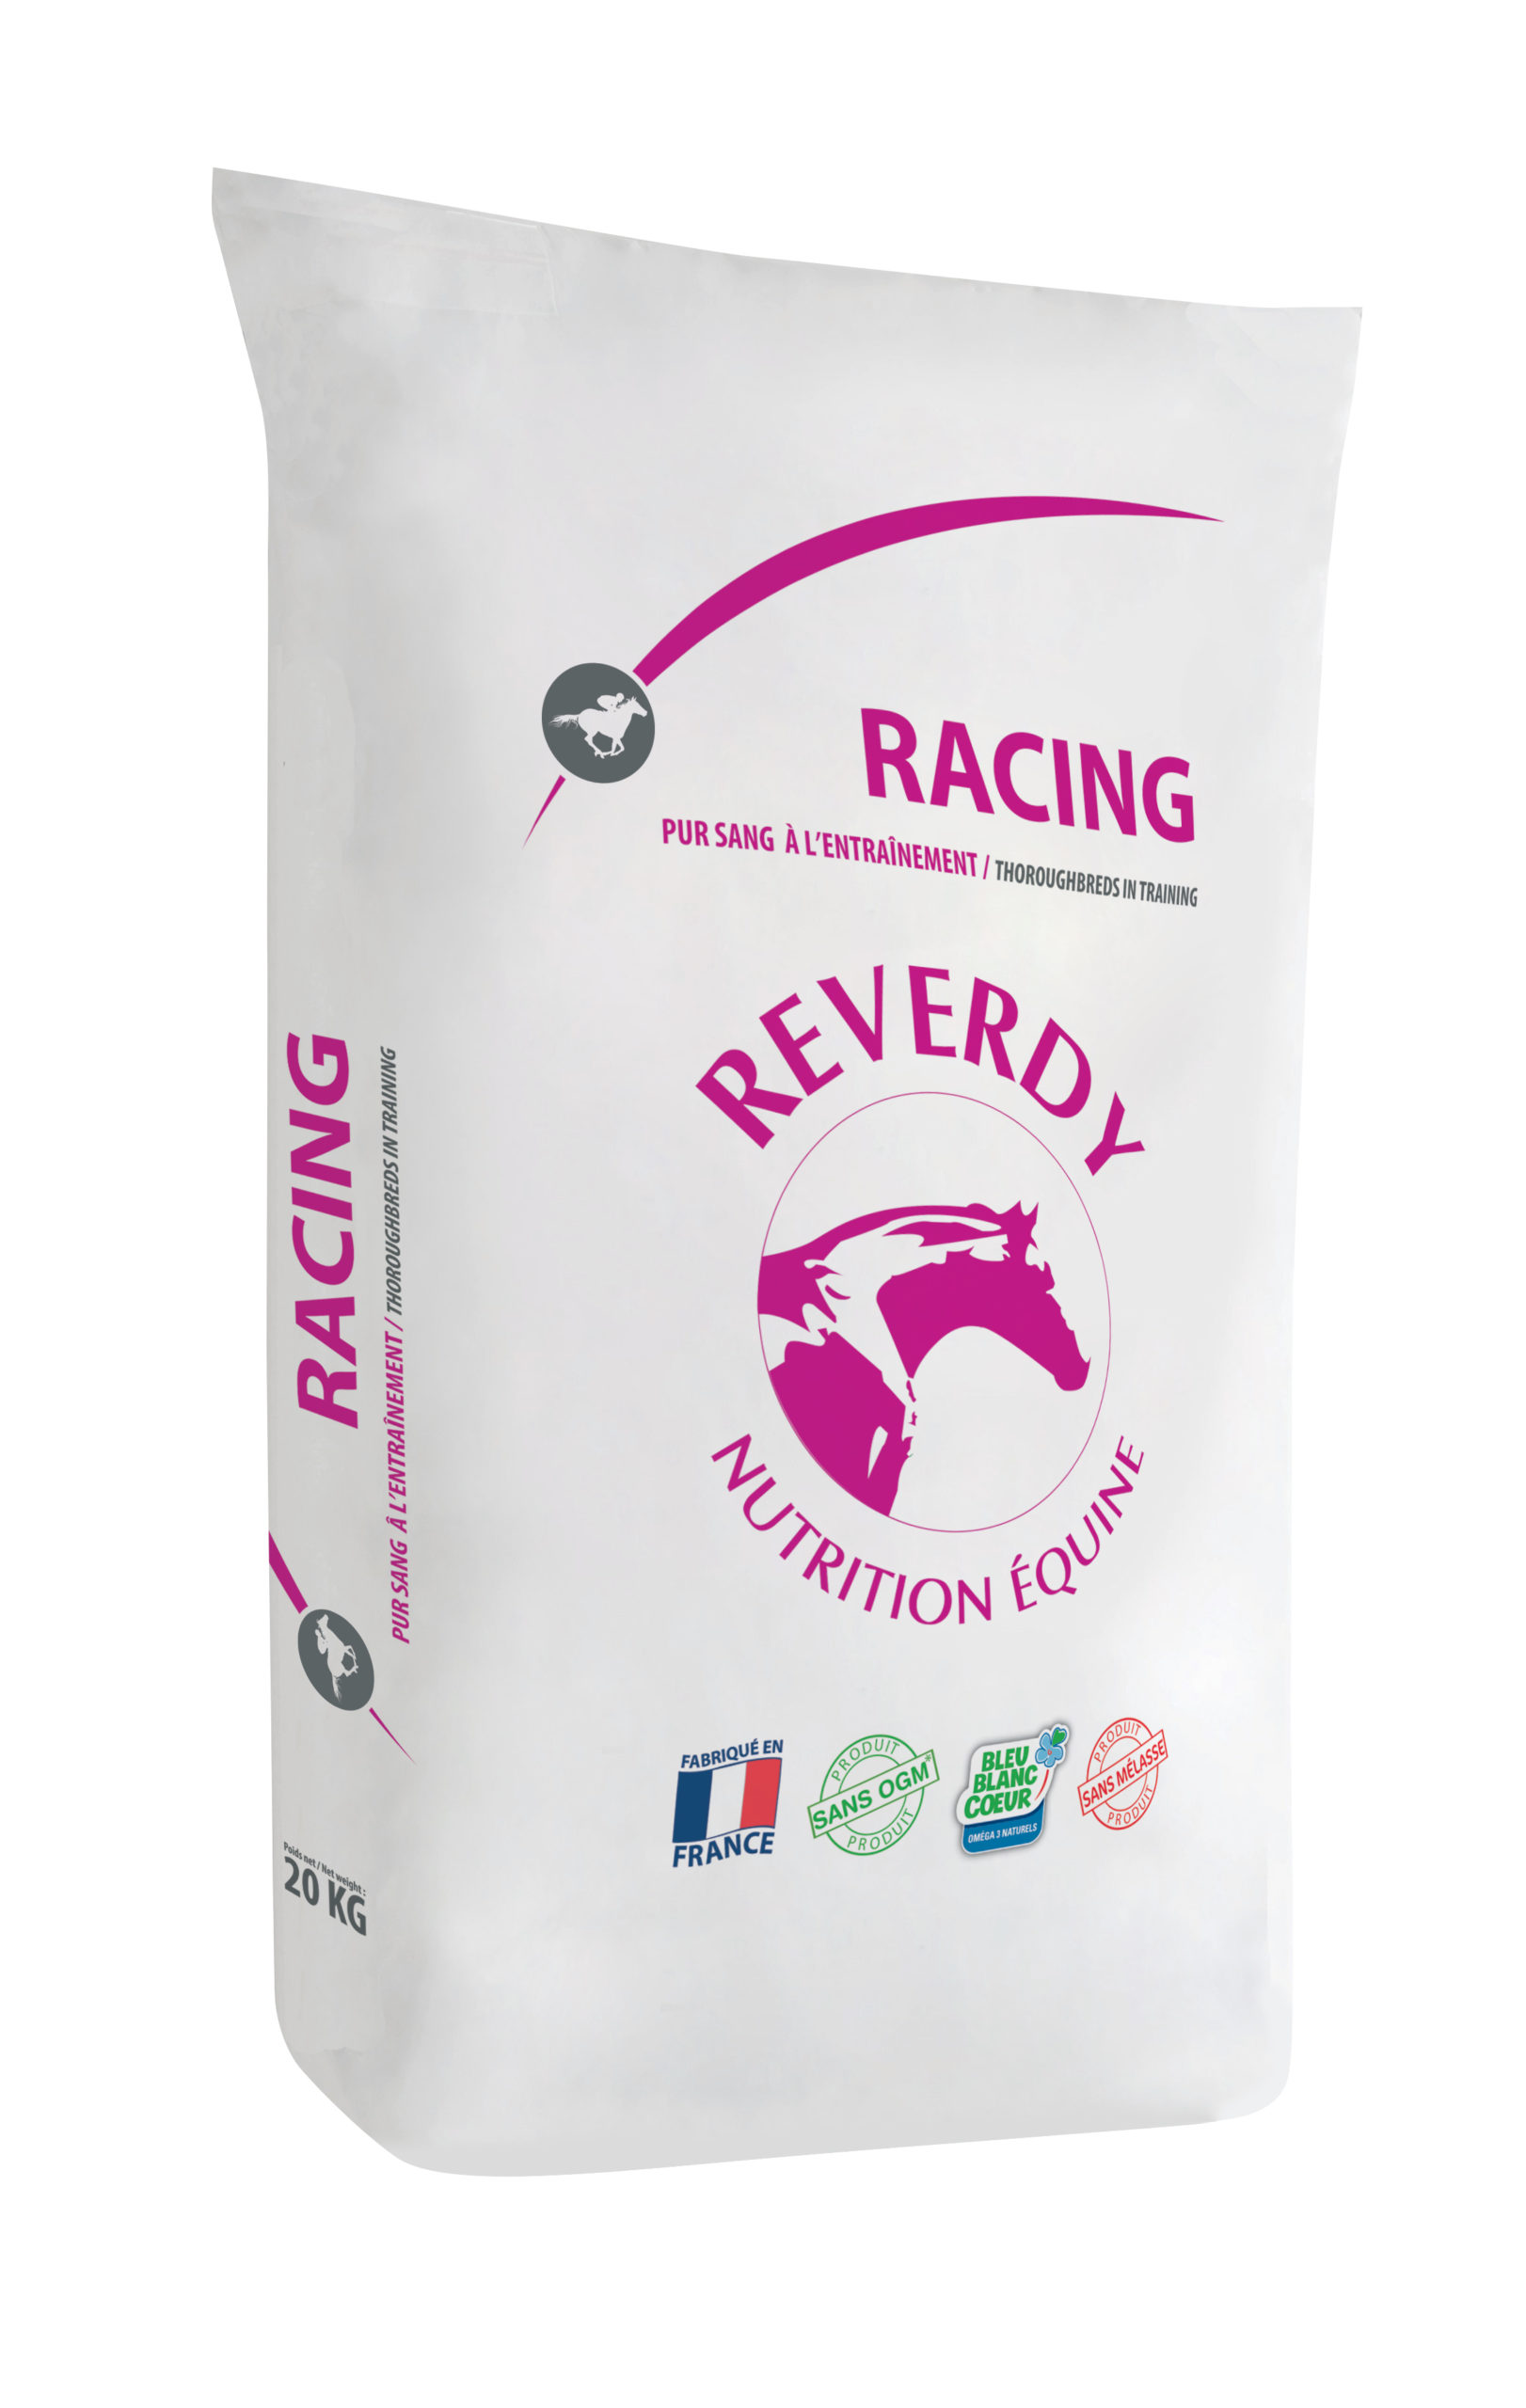 Reverdy-Racing